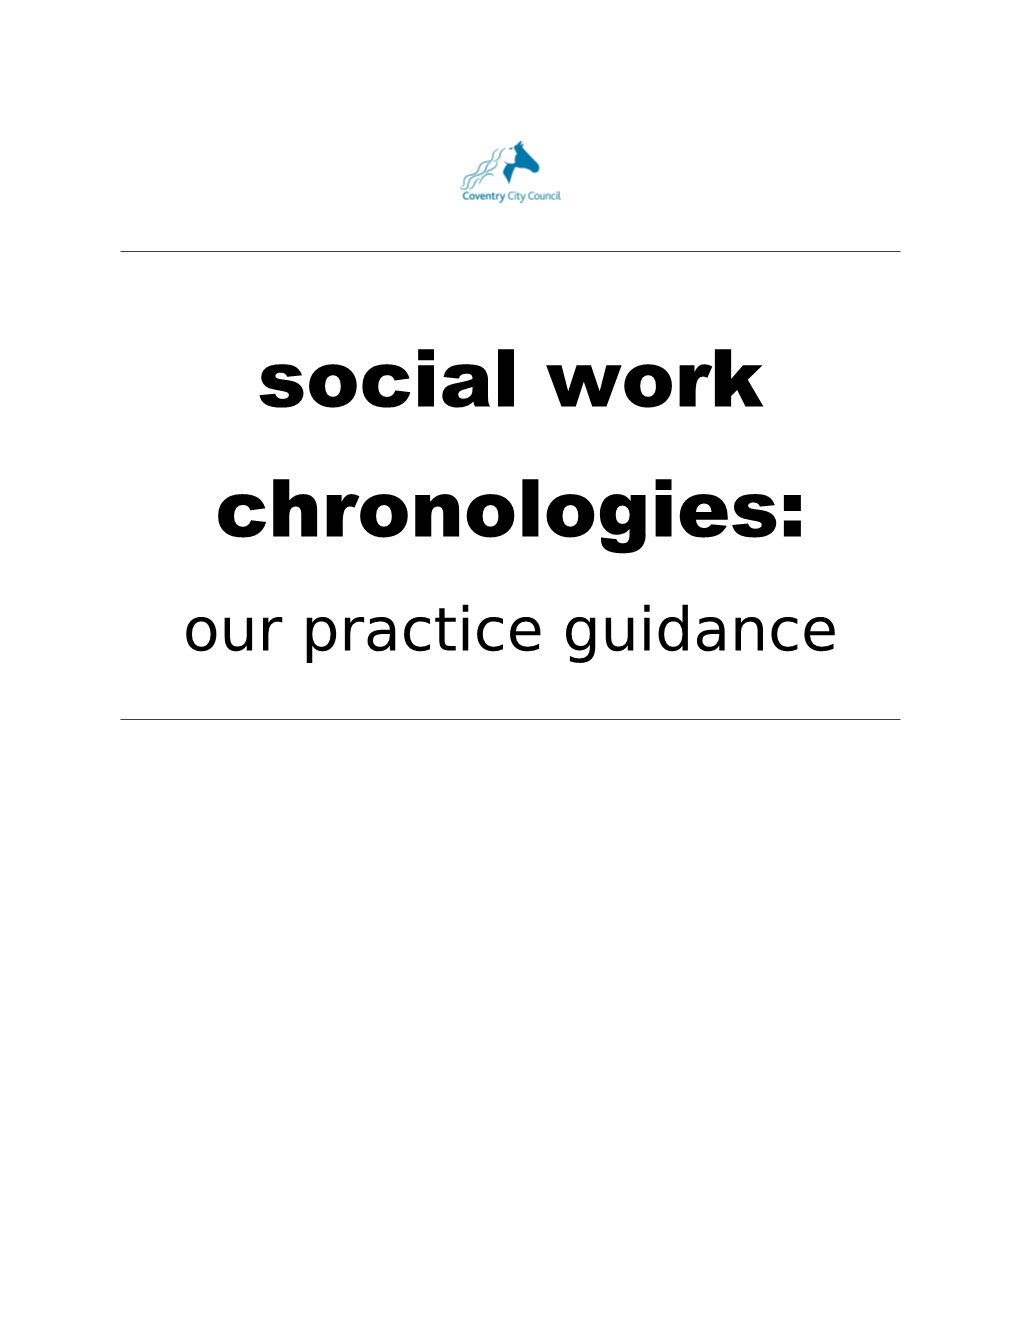 Social Work Chronologies